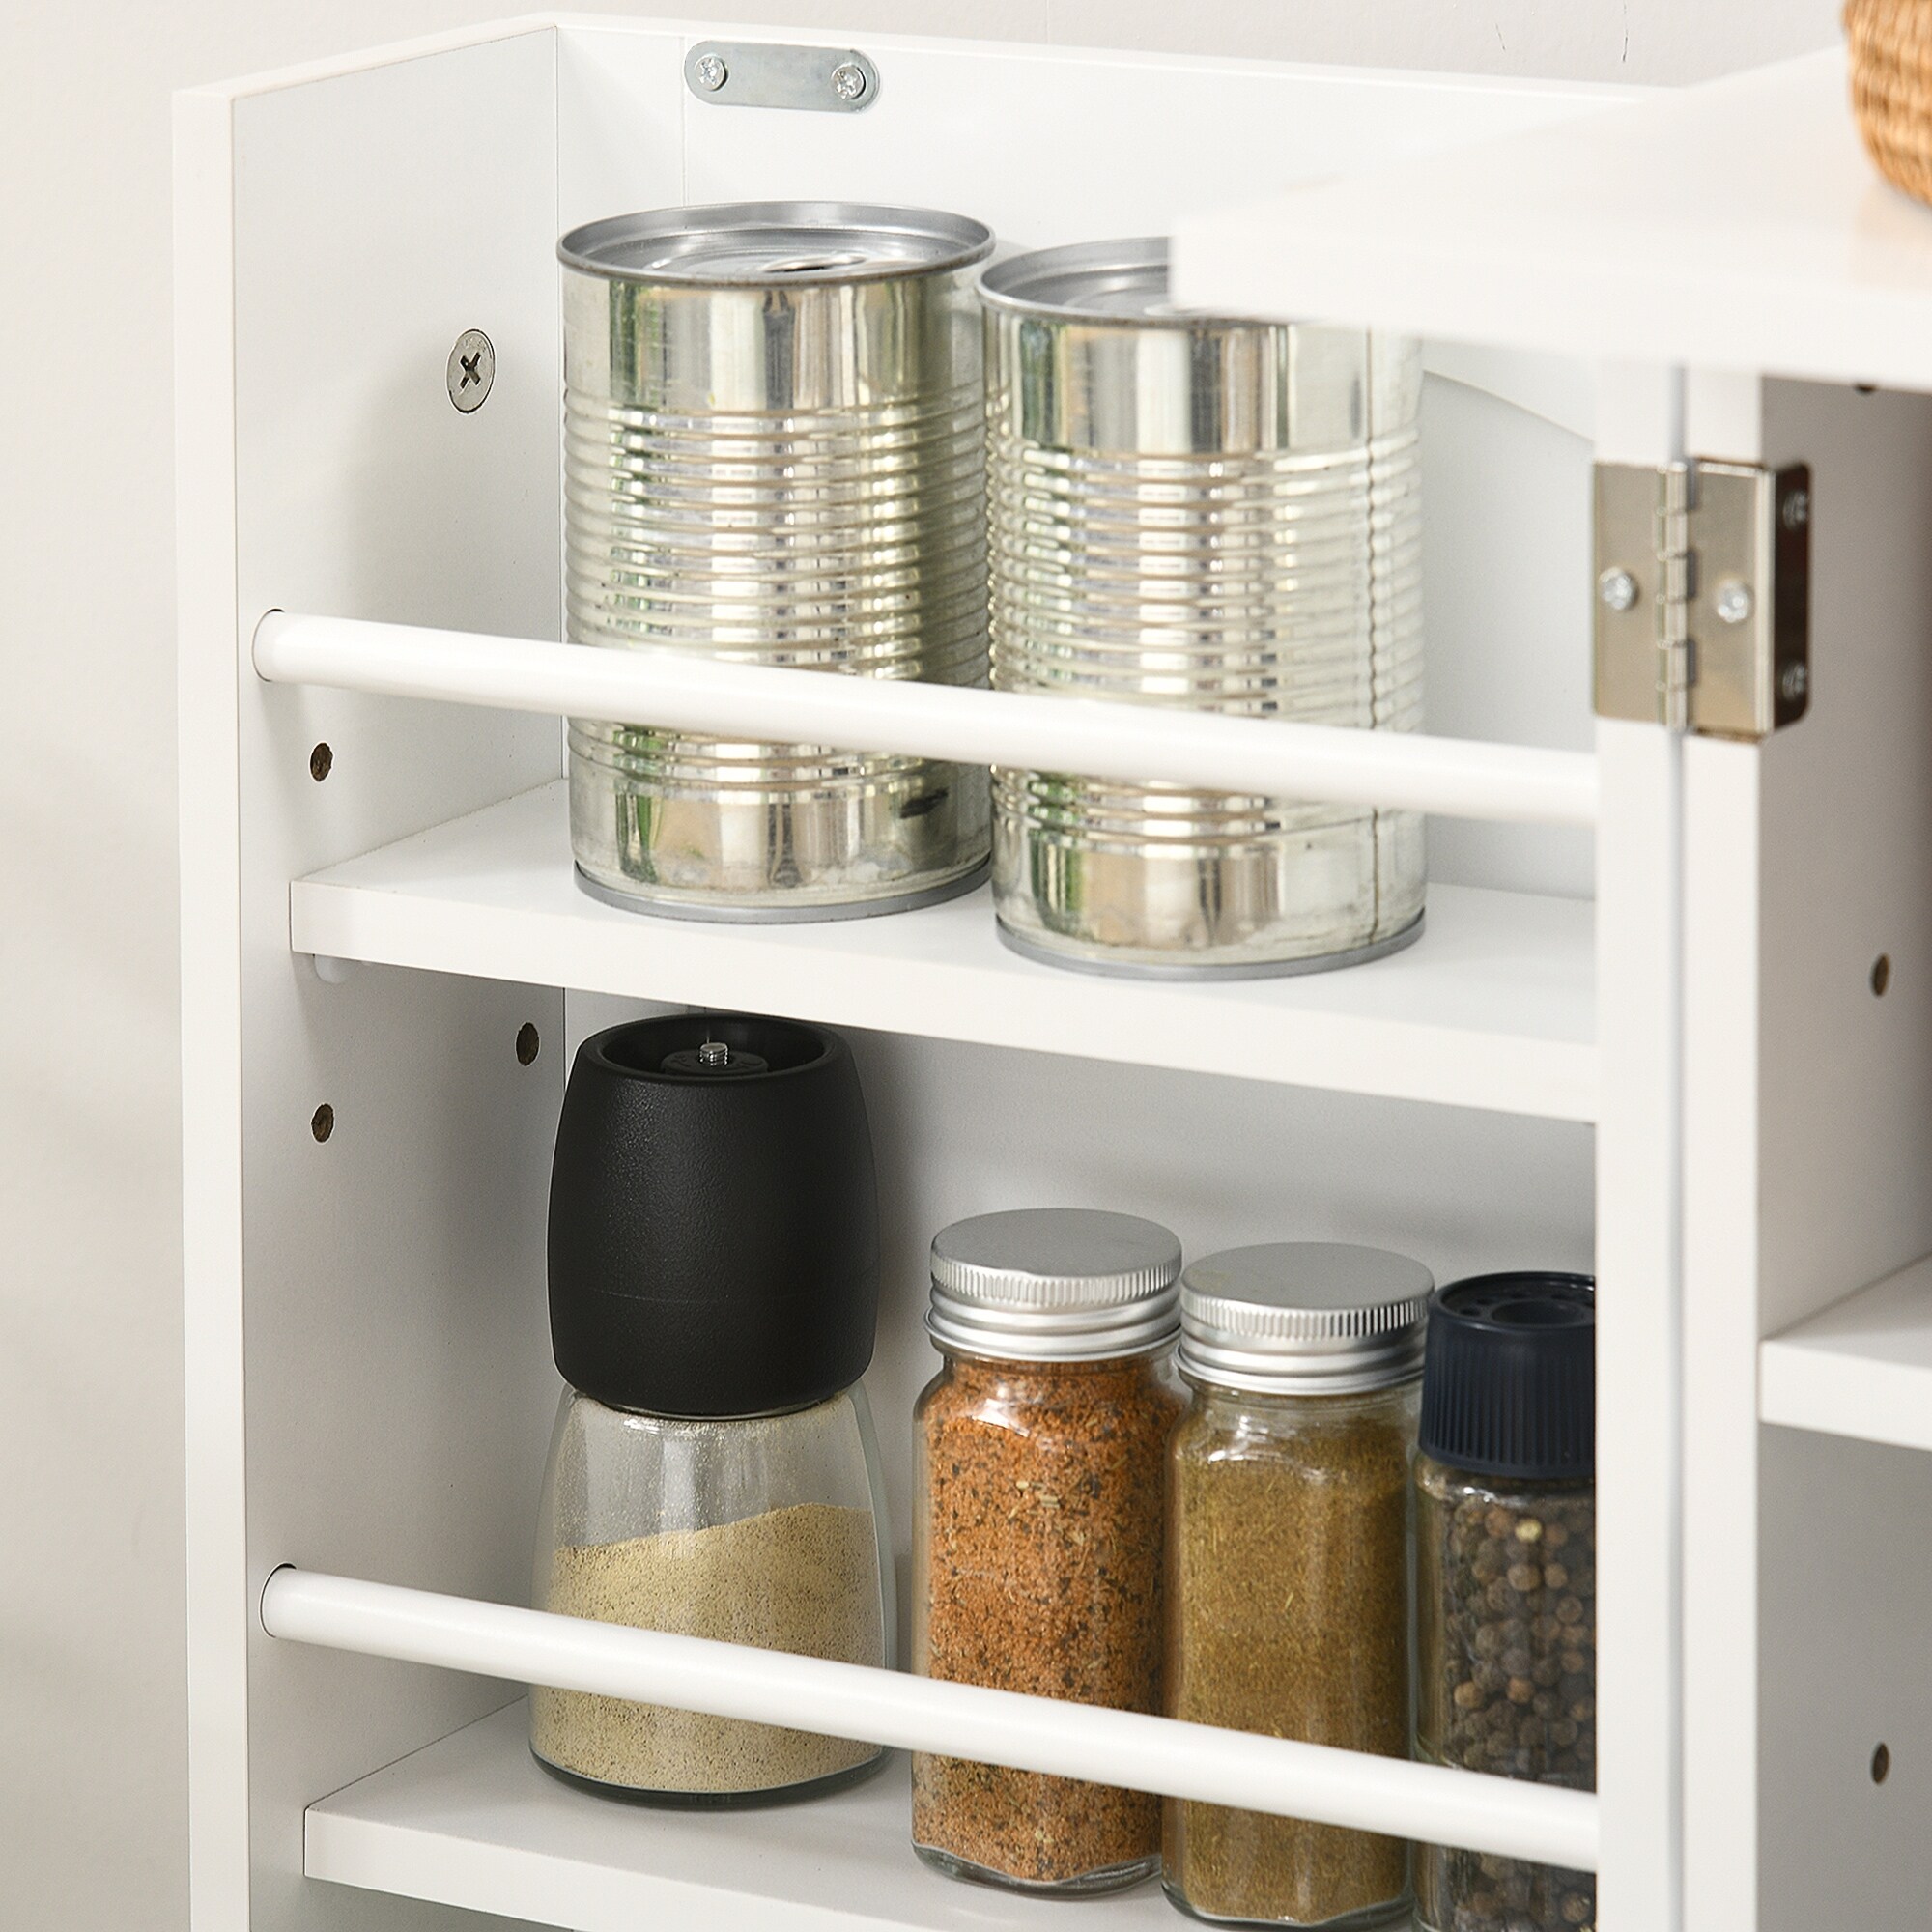 HOMCOM 41 Kitchen Pantry, Modern 2-Door Kitchen Storage Cabinet with  5-tier Shelving, 12 Spice Racks and Adjustable Shelves, Gray